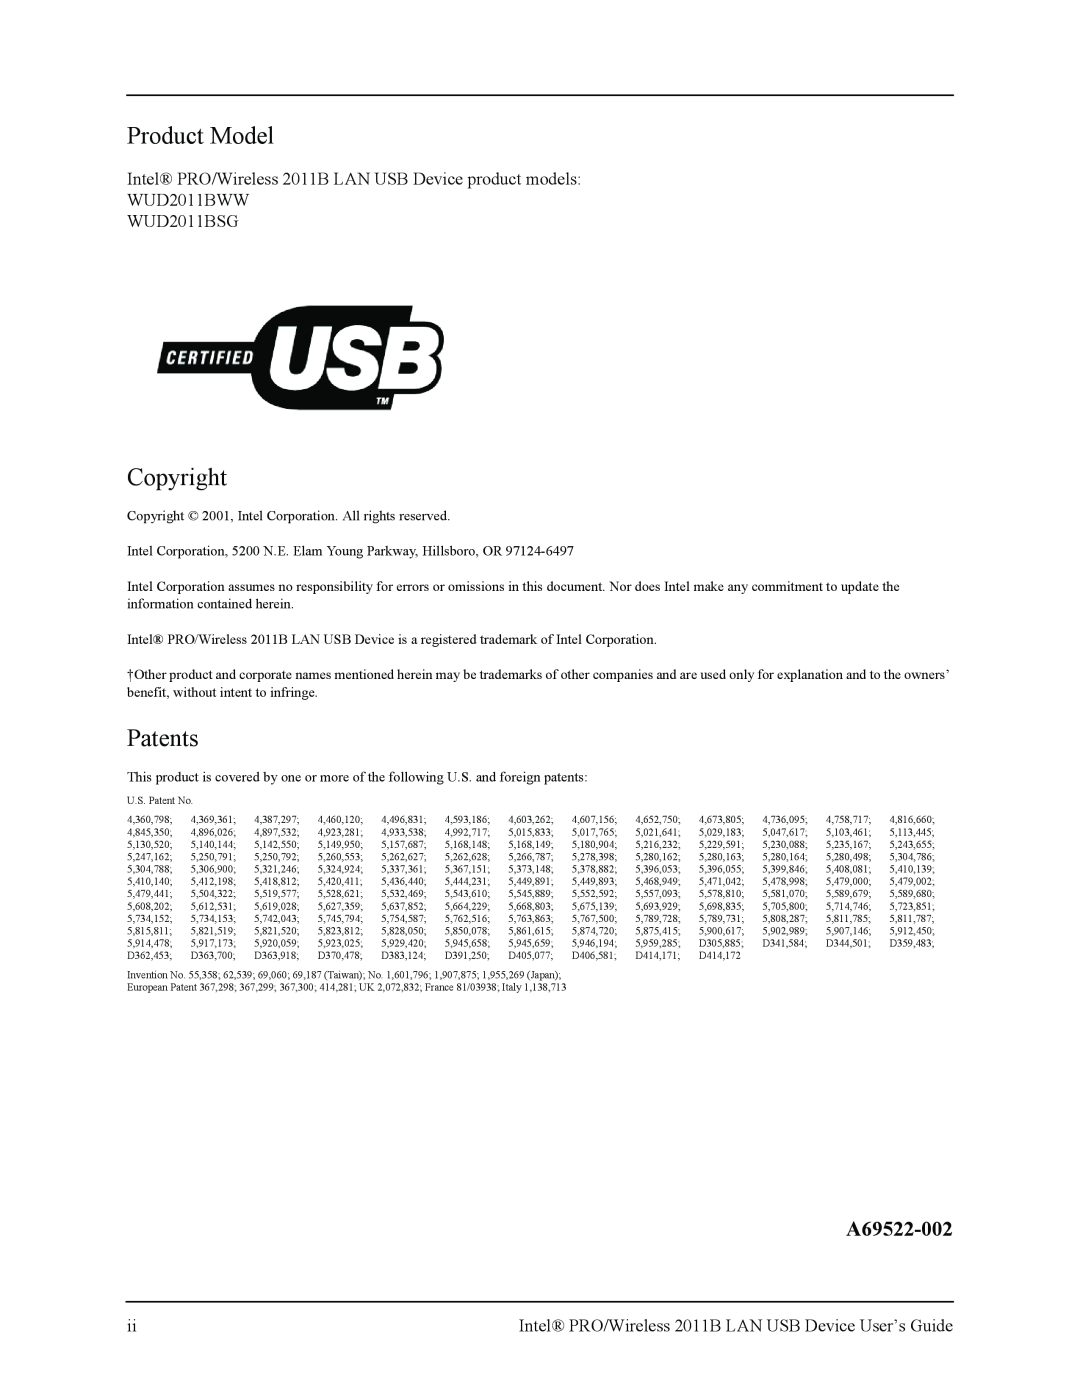 Intel 2011B manual Product Model, Copyright, Patents, A69522-002 